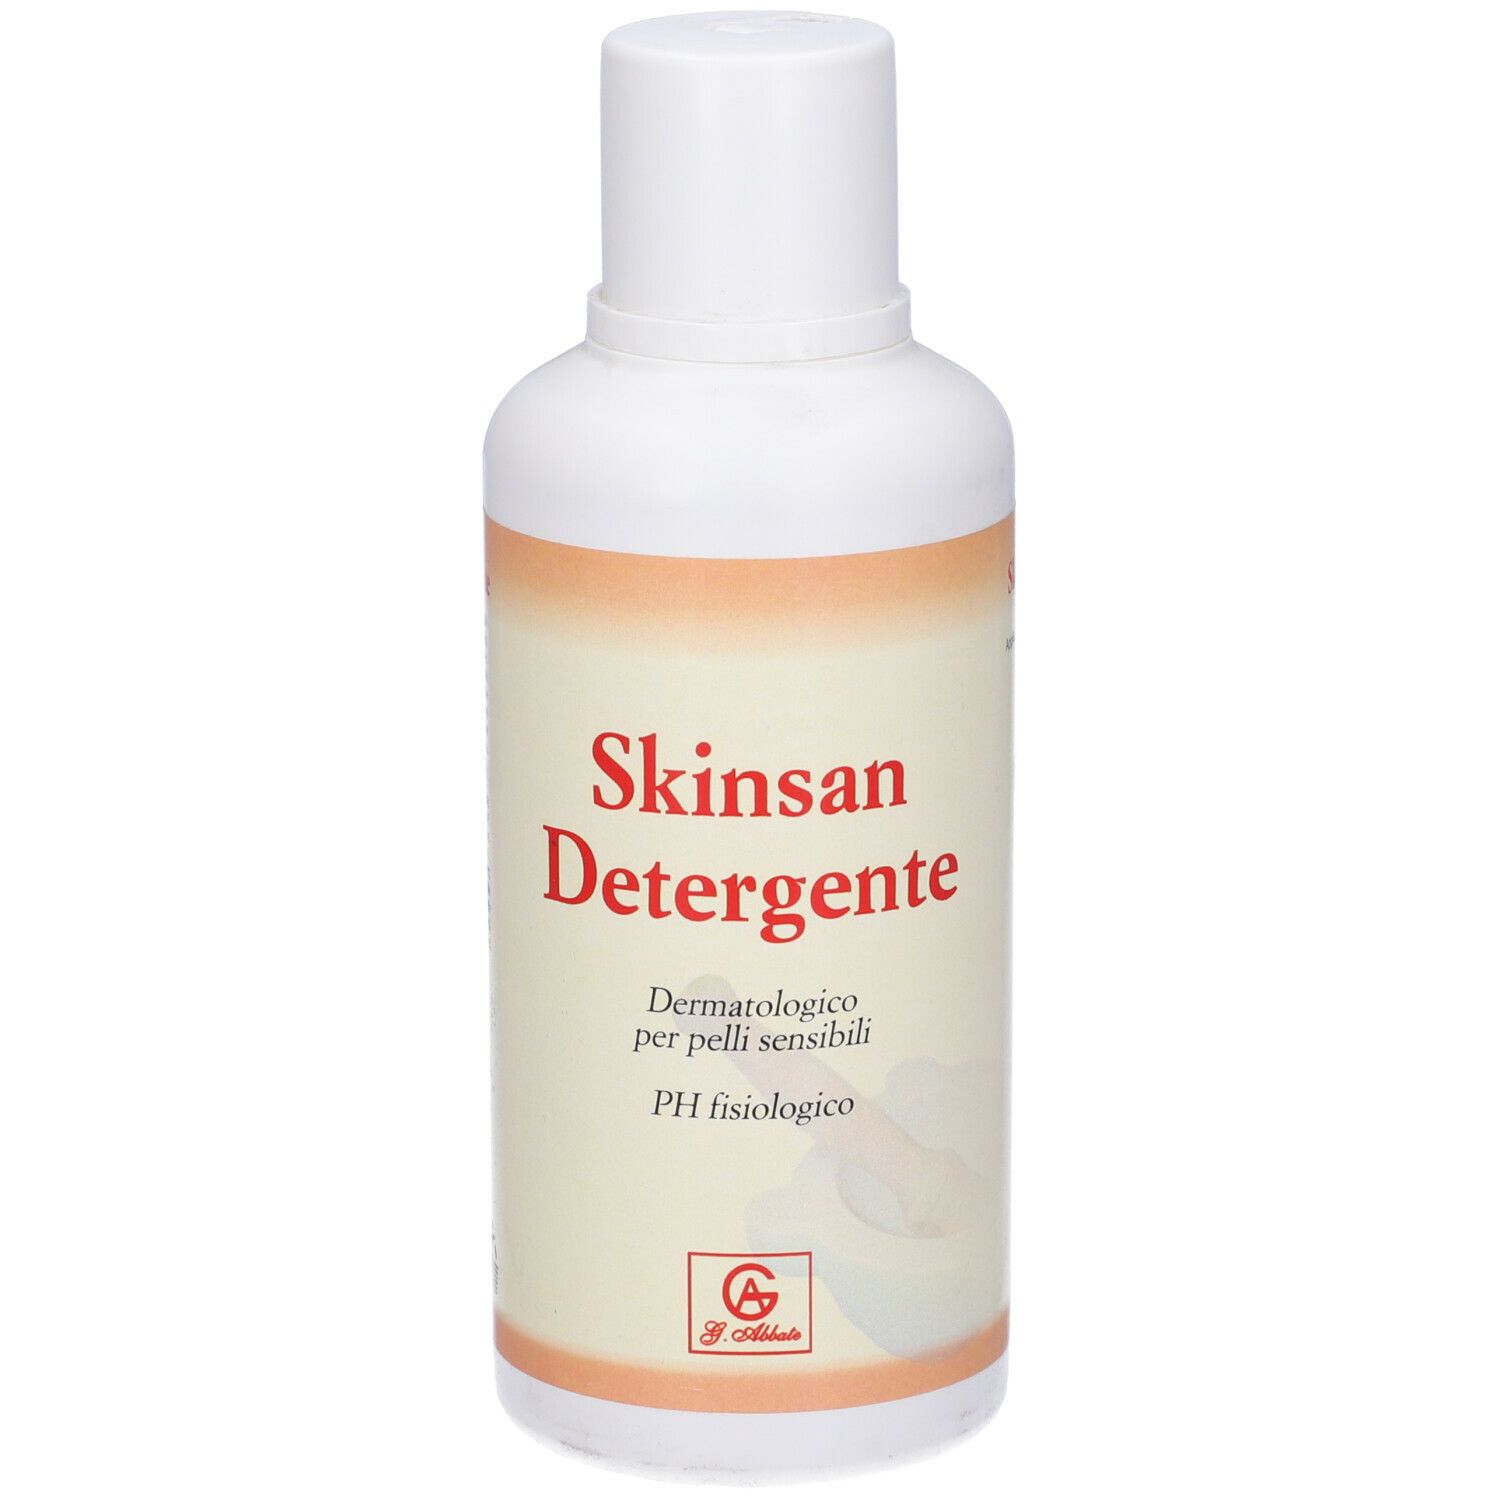 Image of Skinsan Detergente Dermatologico